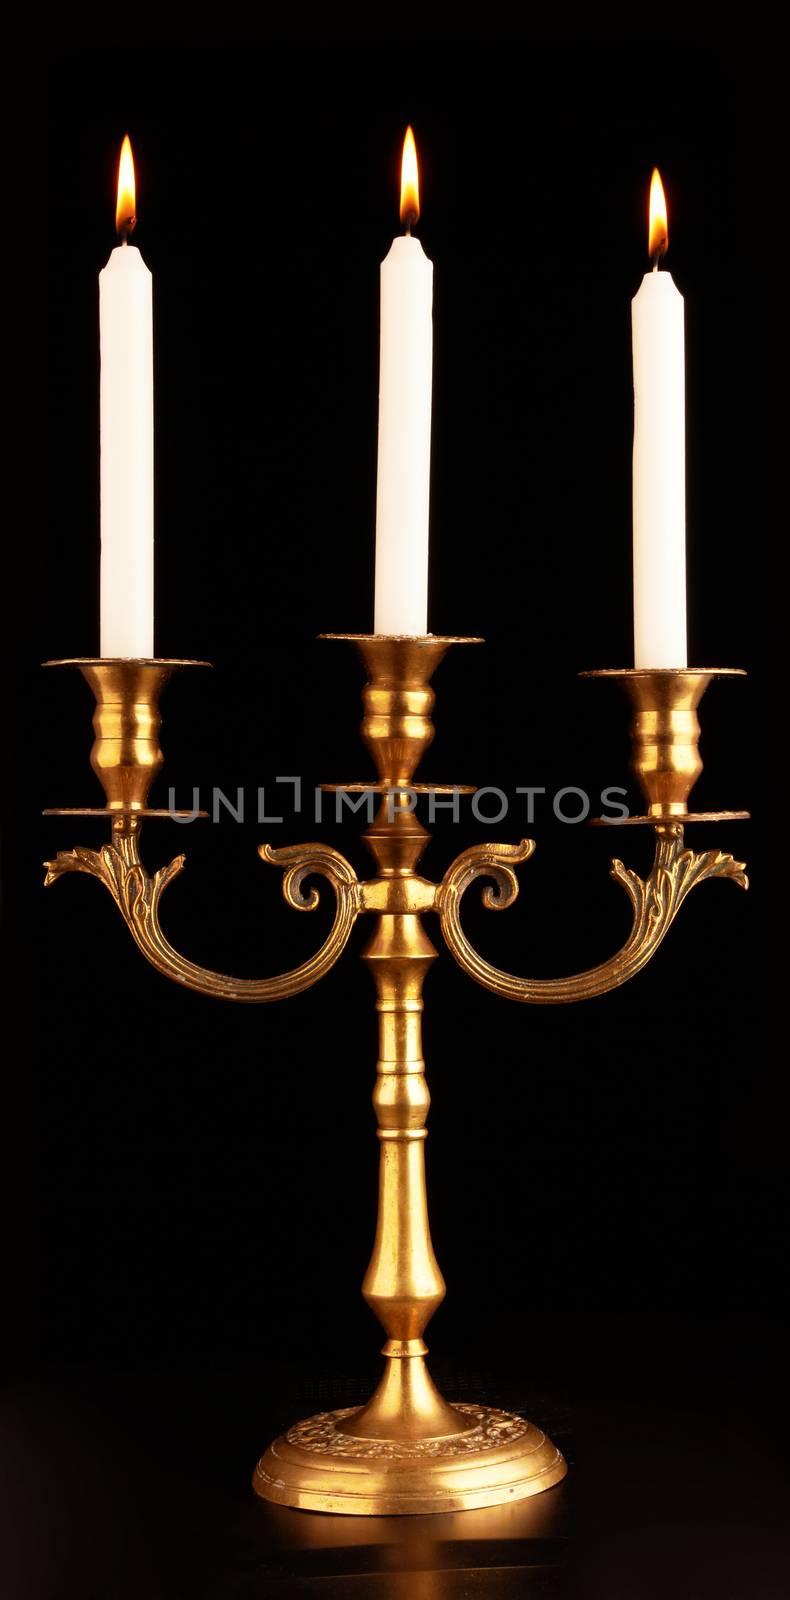 Old-fashioned baroque elegant candlestick on a black background 